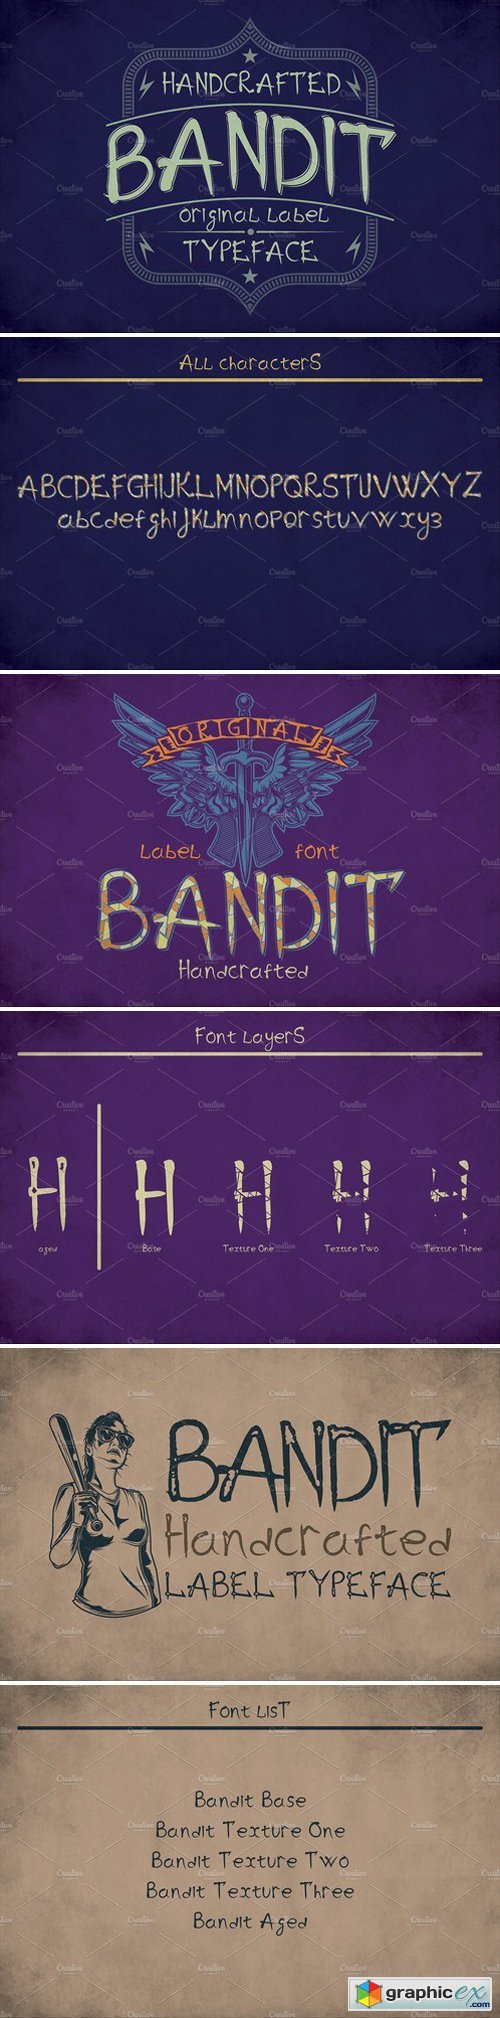 Bandit Modern Label Typeface